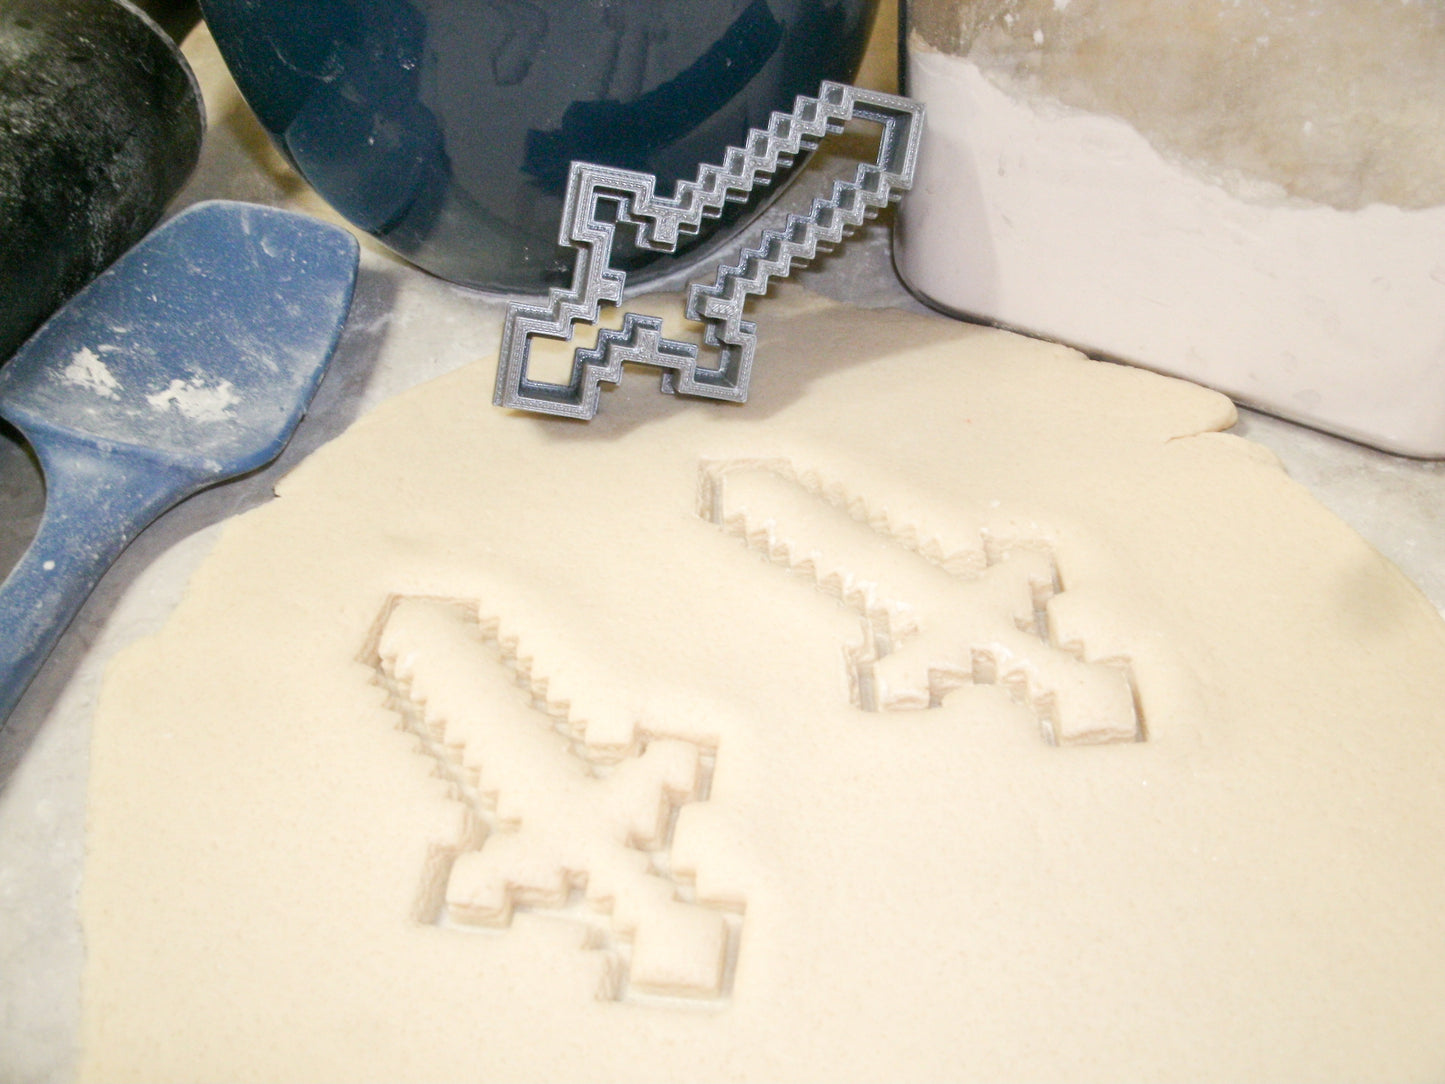 Minecraft Sword Shape Block Adventure Video Game Cookie Cutter Made In USA PR426